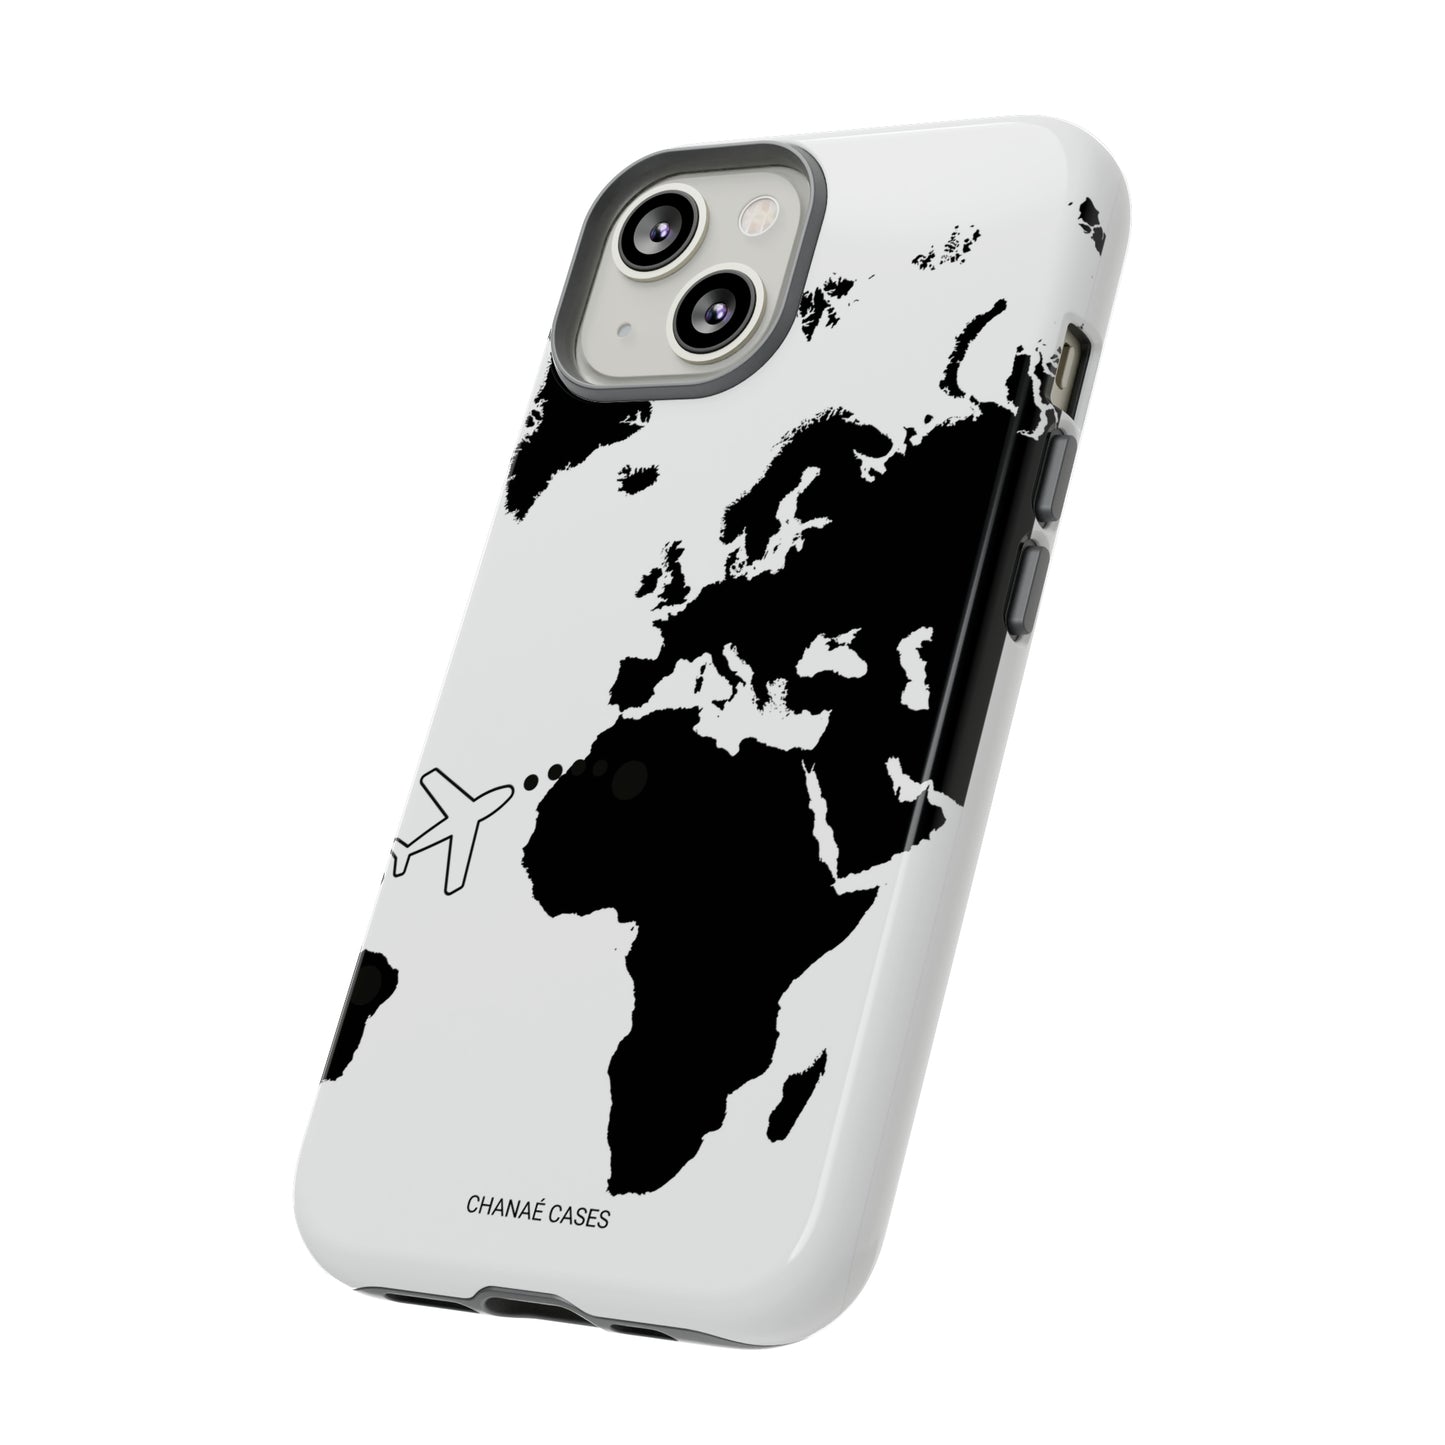 Next Destination iPhone "Tough" Case (White)